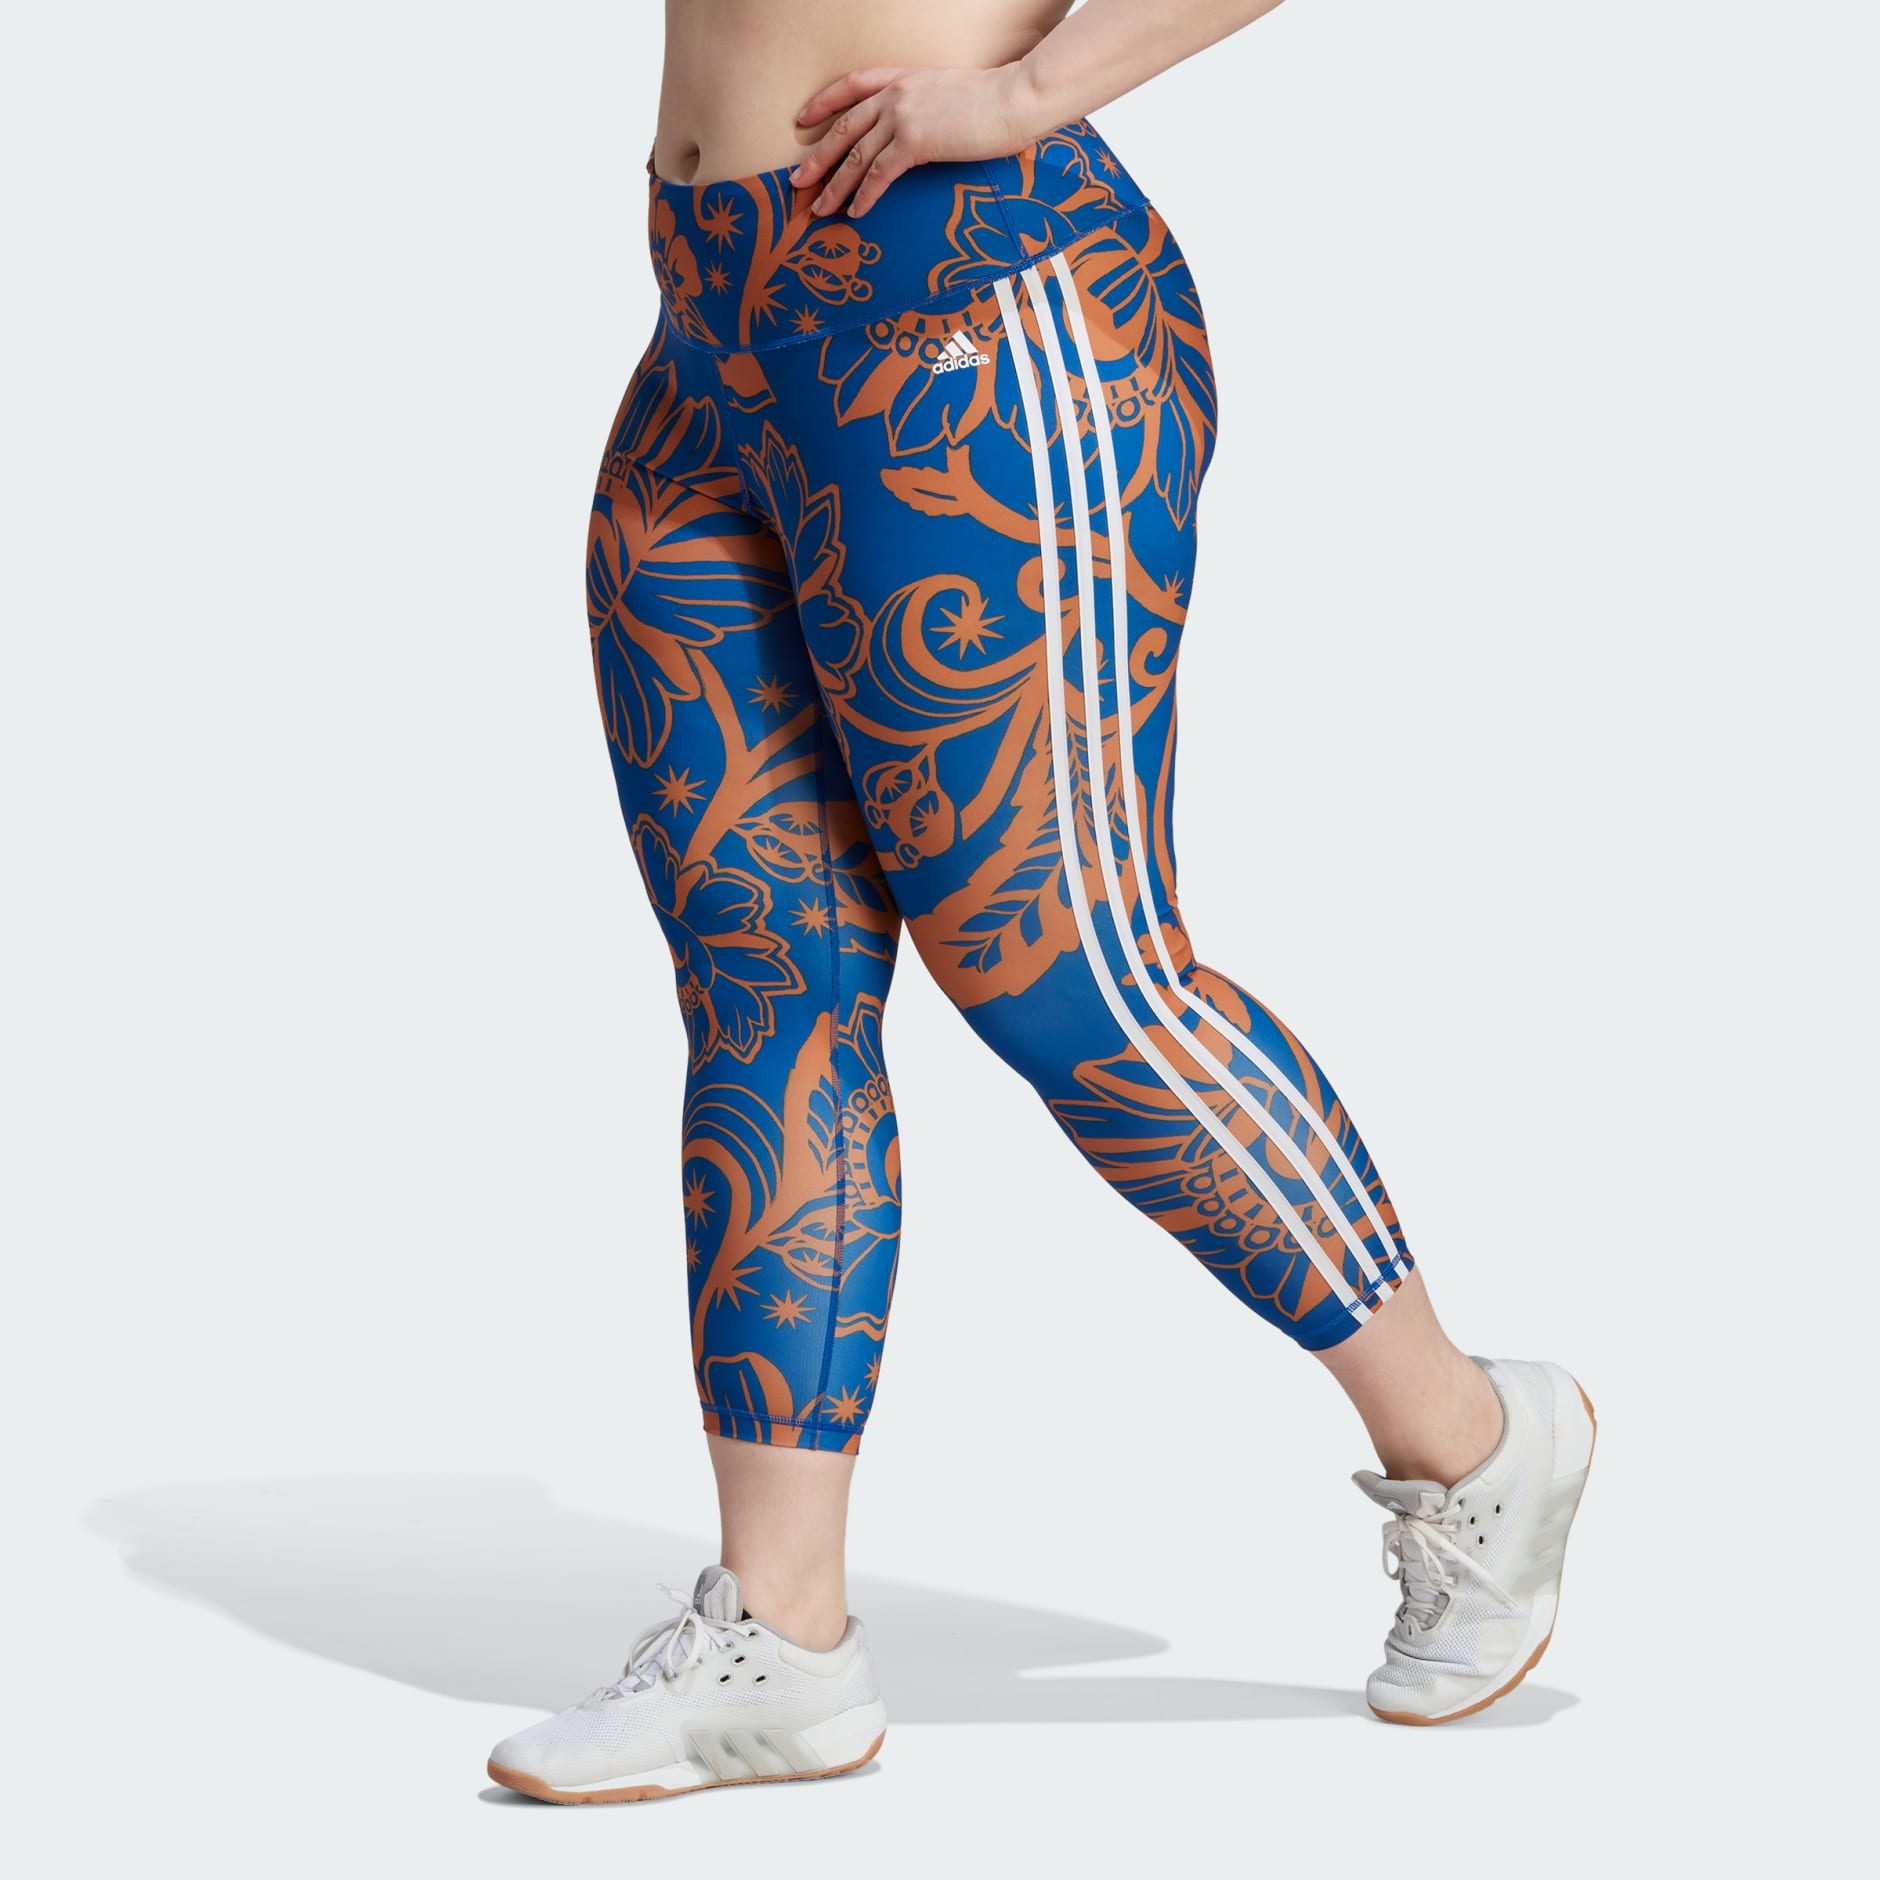 Women's Clothing - adidas x FARM Rio 7/8 Leggings (Plus Size) - Blue